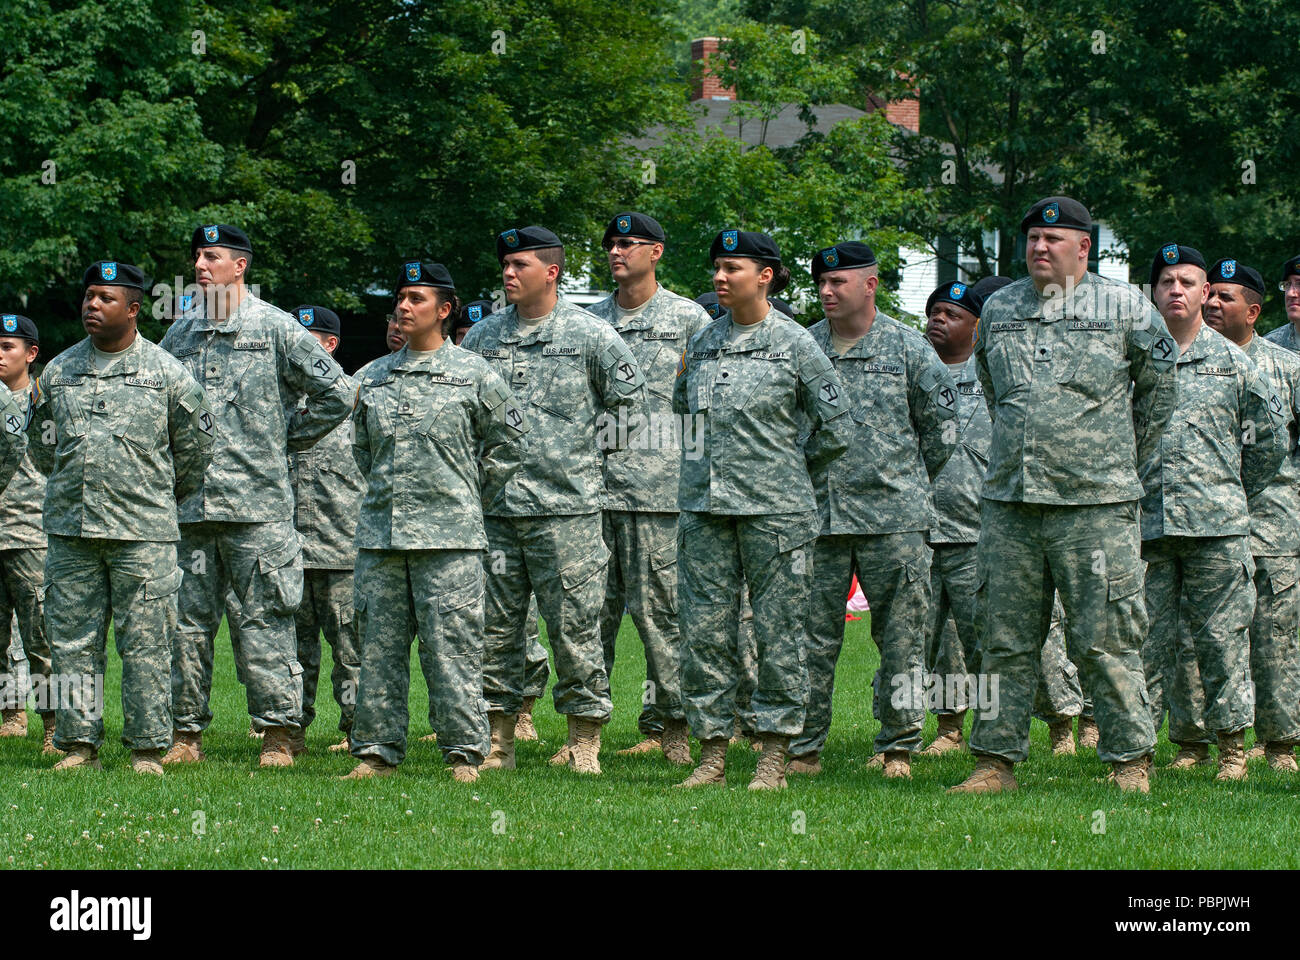 massachusetts-national-guard-deployment-in-lexington-middlesex-county-massachusetts-usa-PBPJWH.jpg